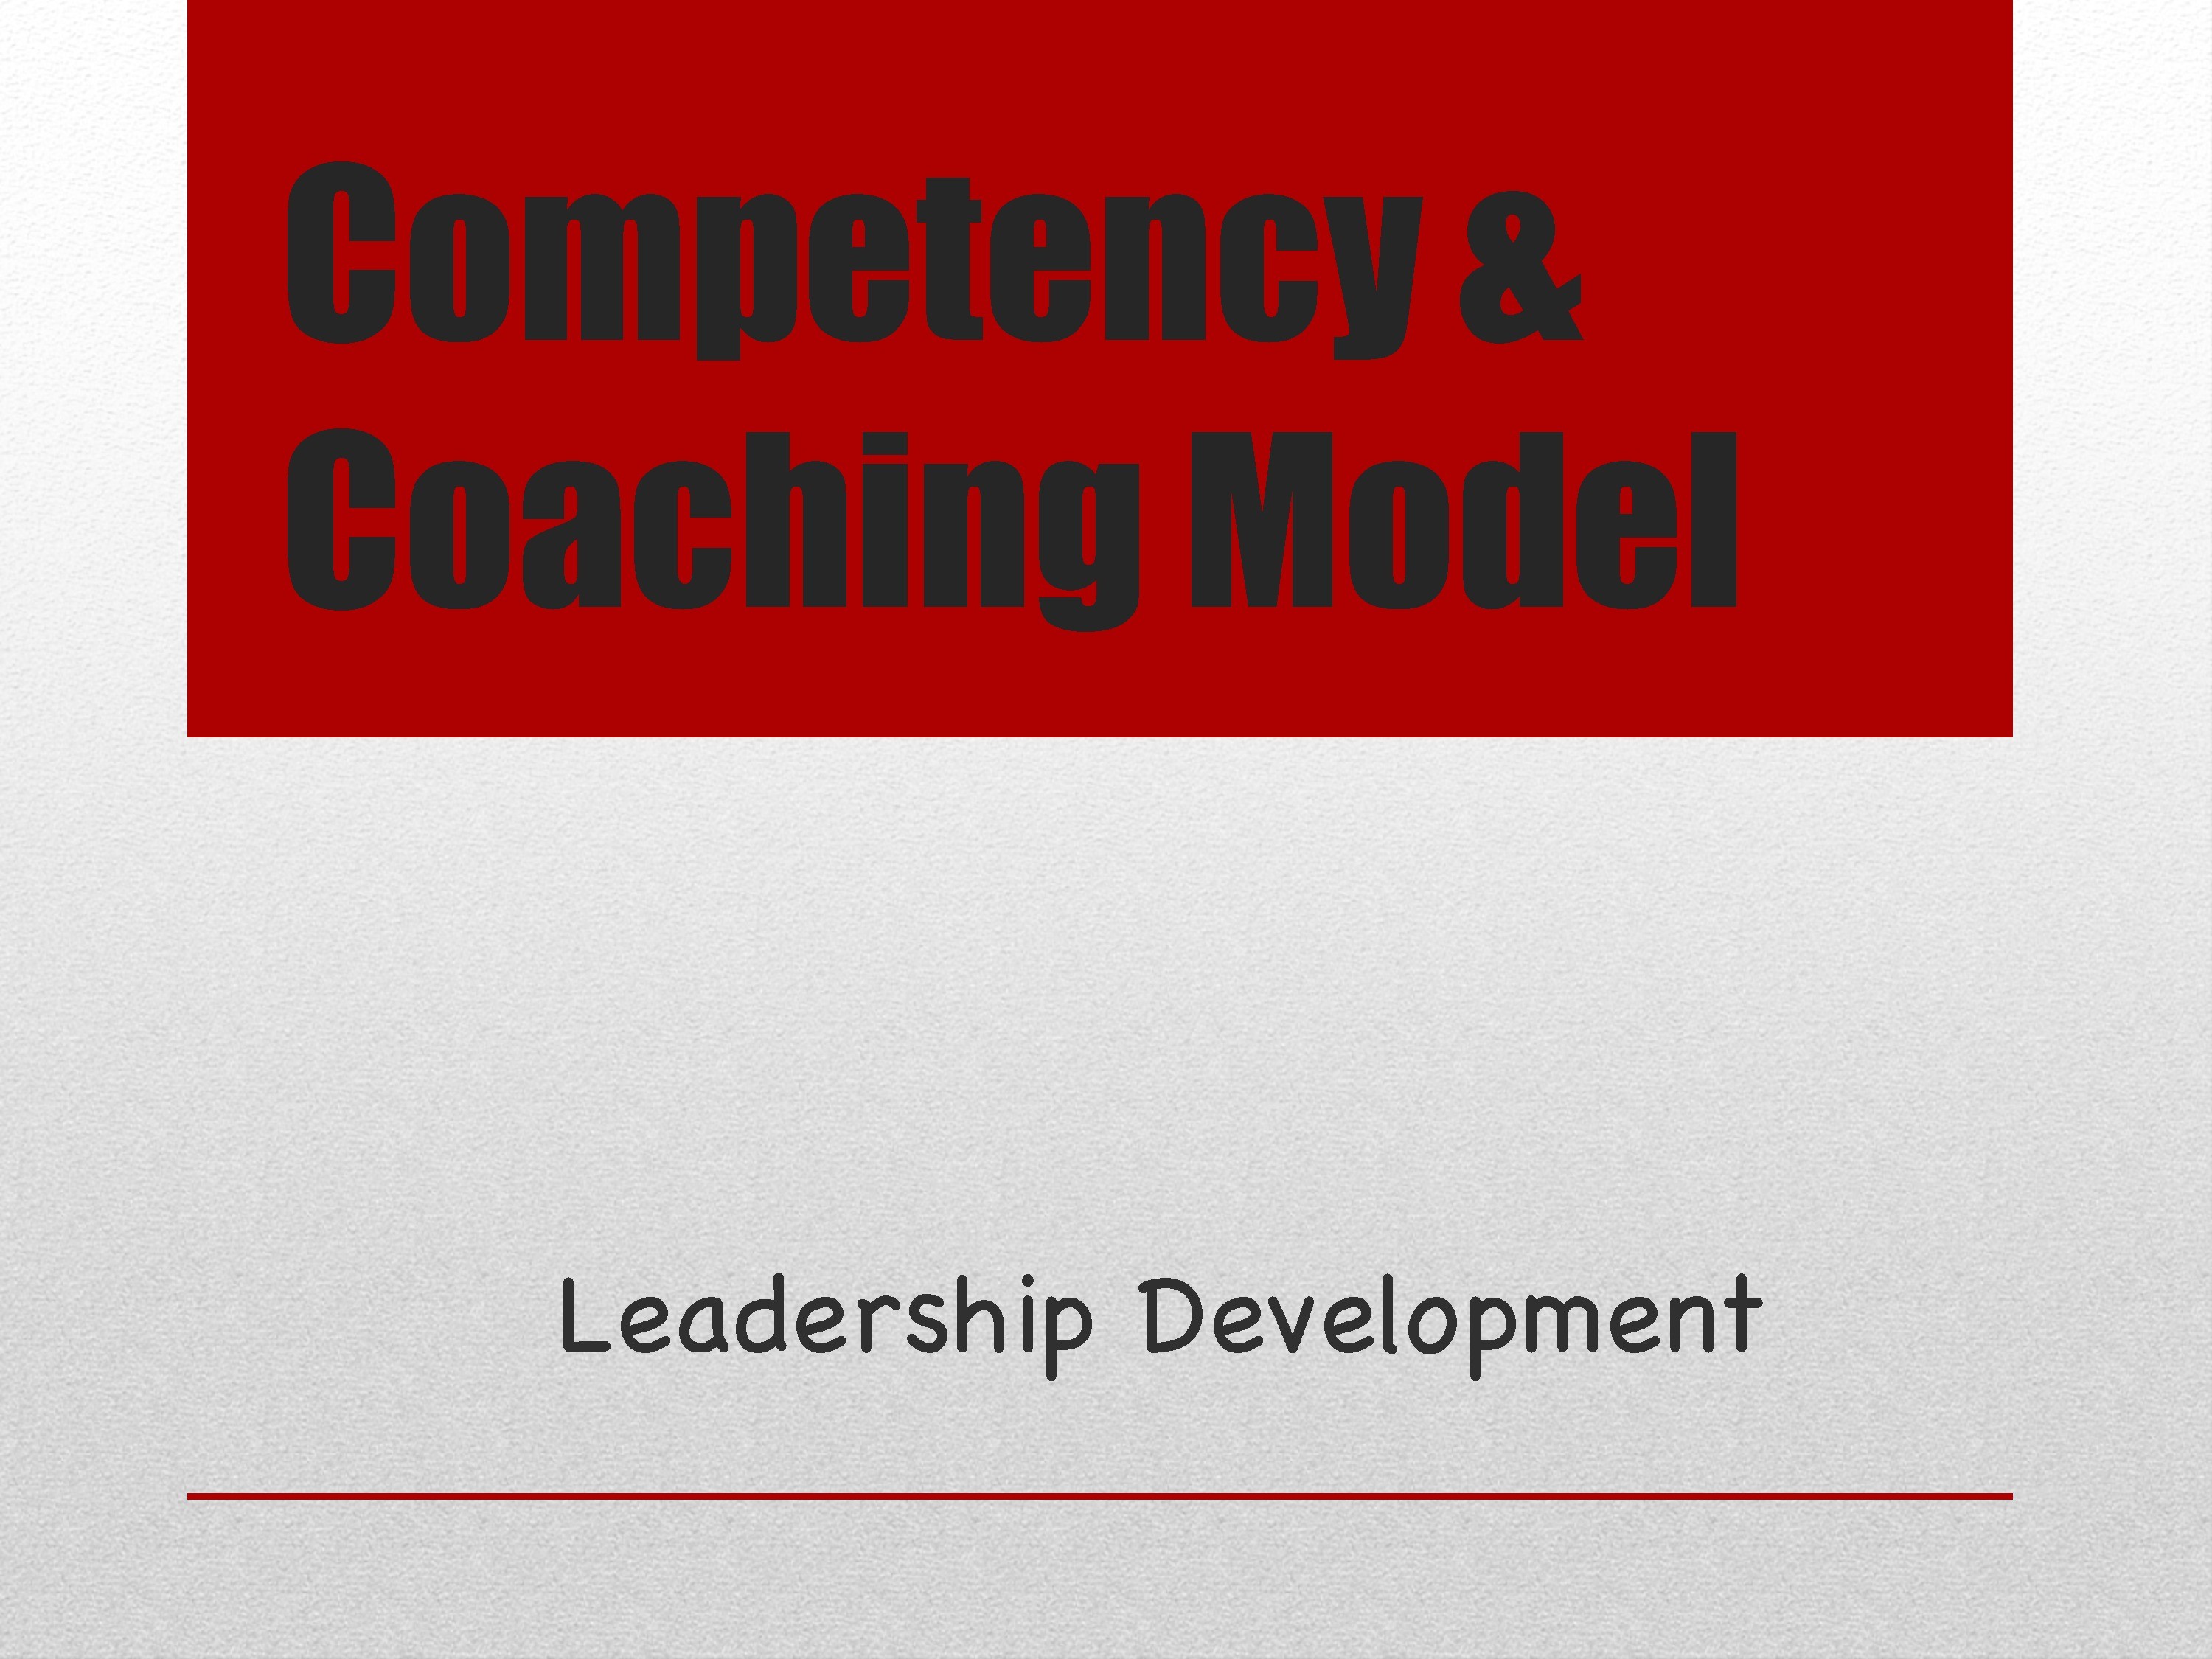 Competency & Coaching Model